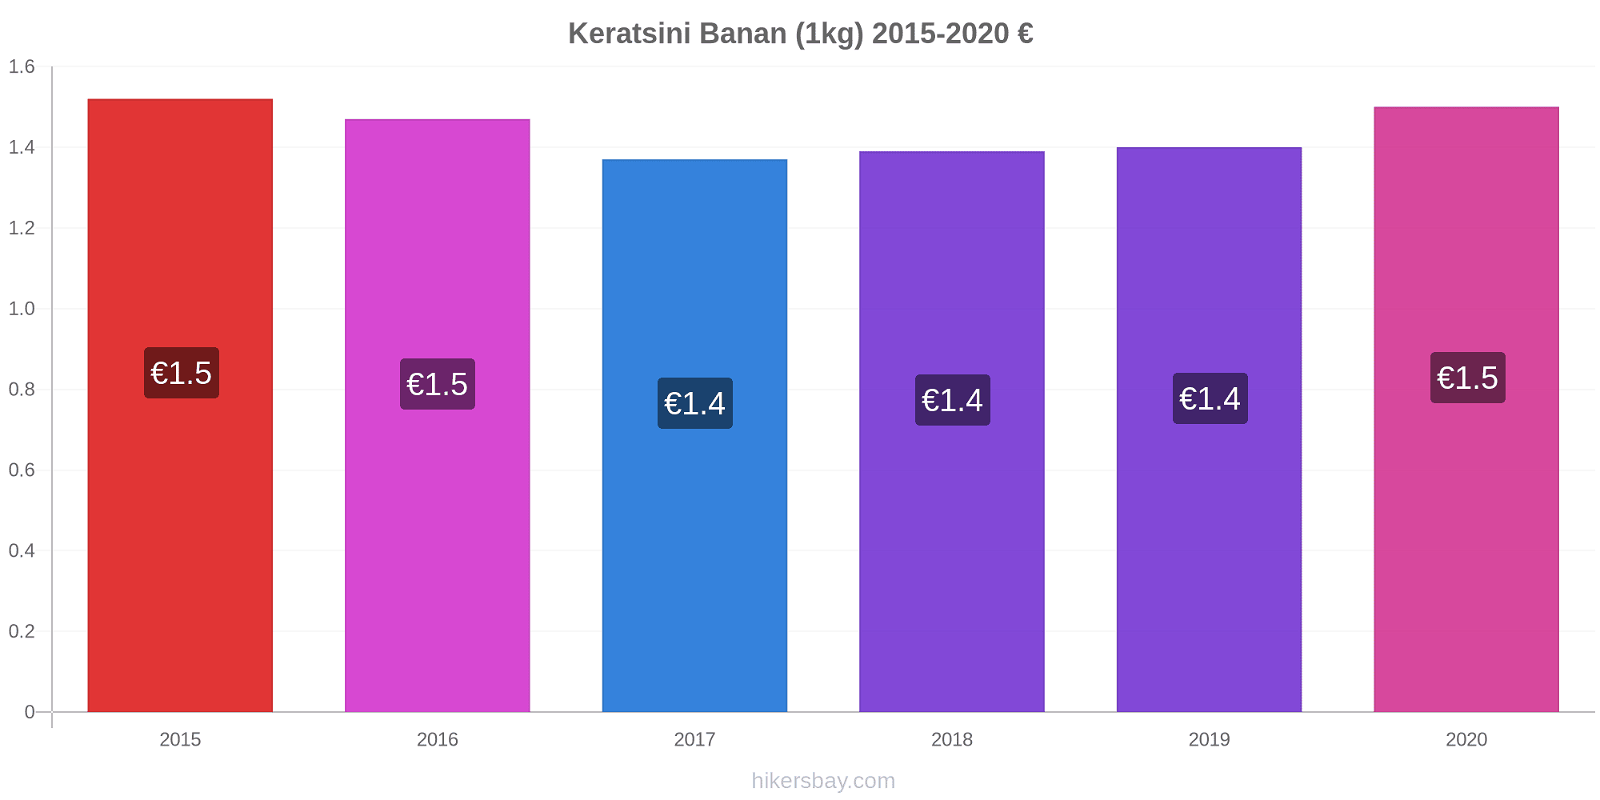 Keratsini prisendringer Banan (1kg) hikersbay.com